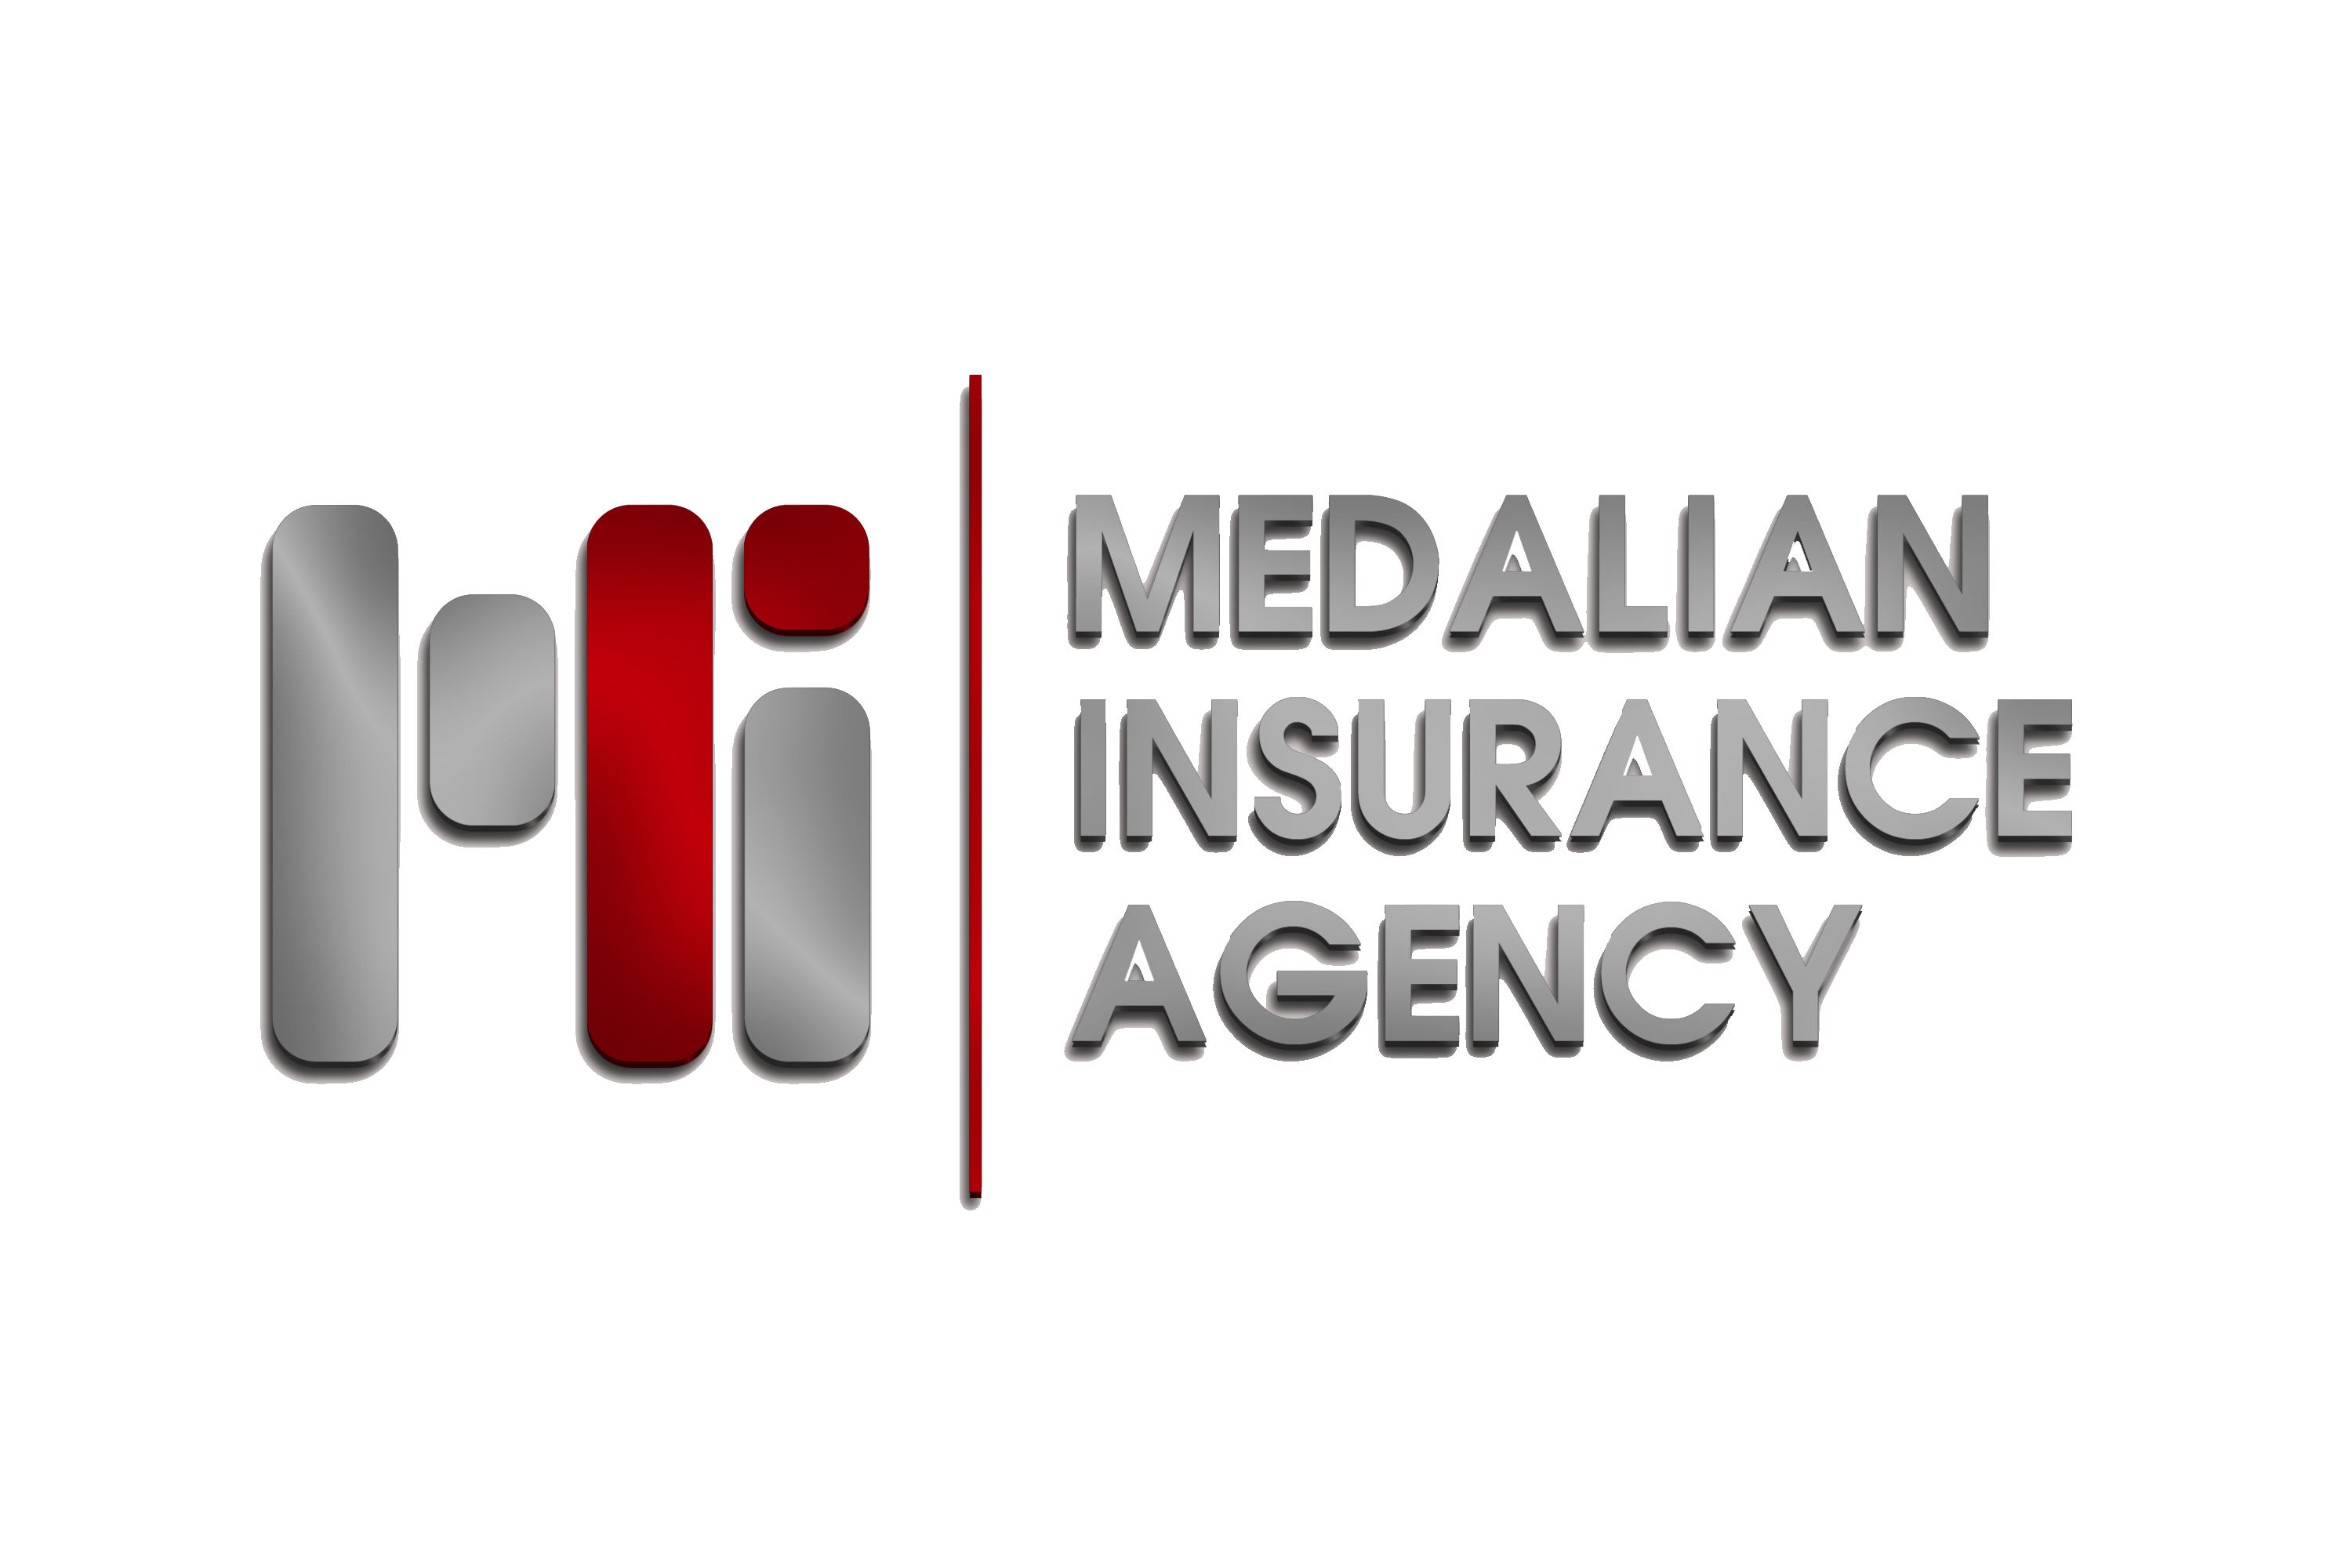 Medalian Insurance